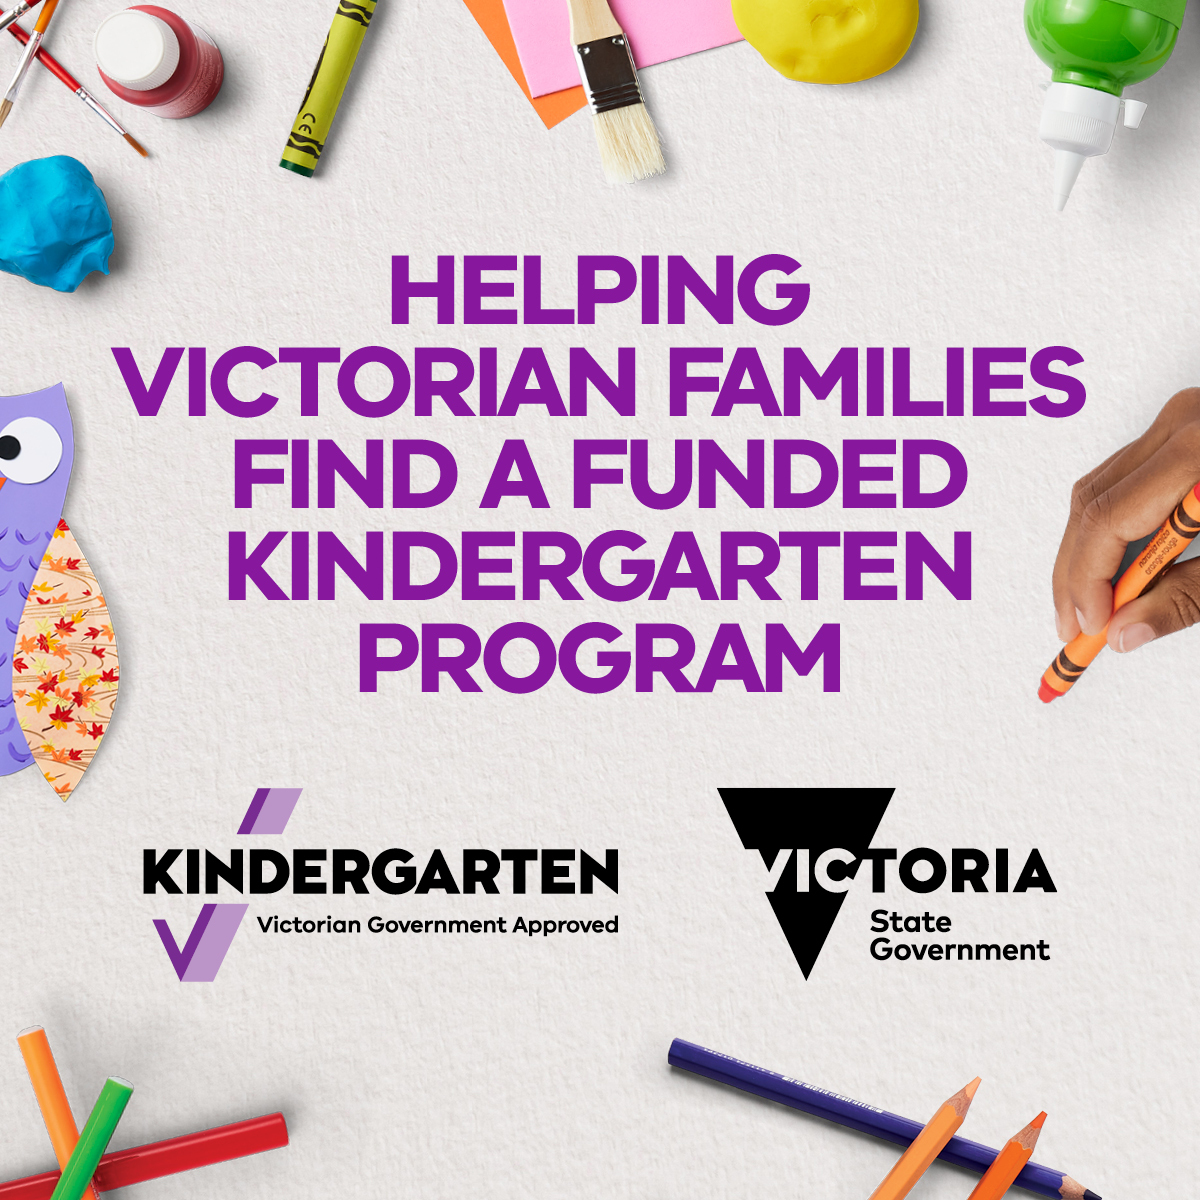 kinder-tick-social-media-tile-helping-victorian-families